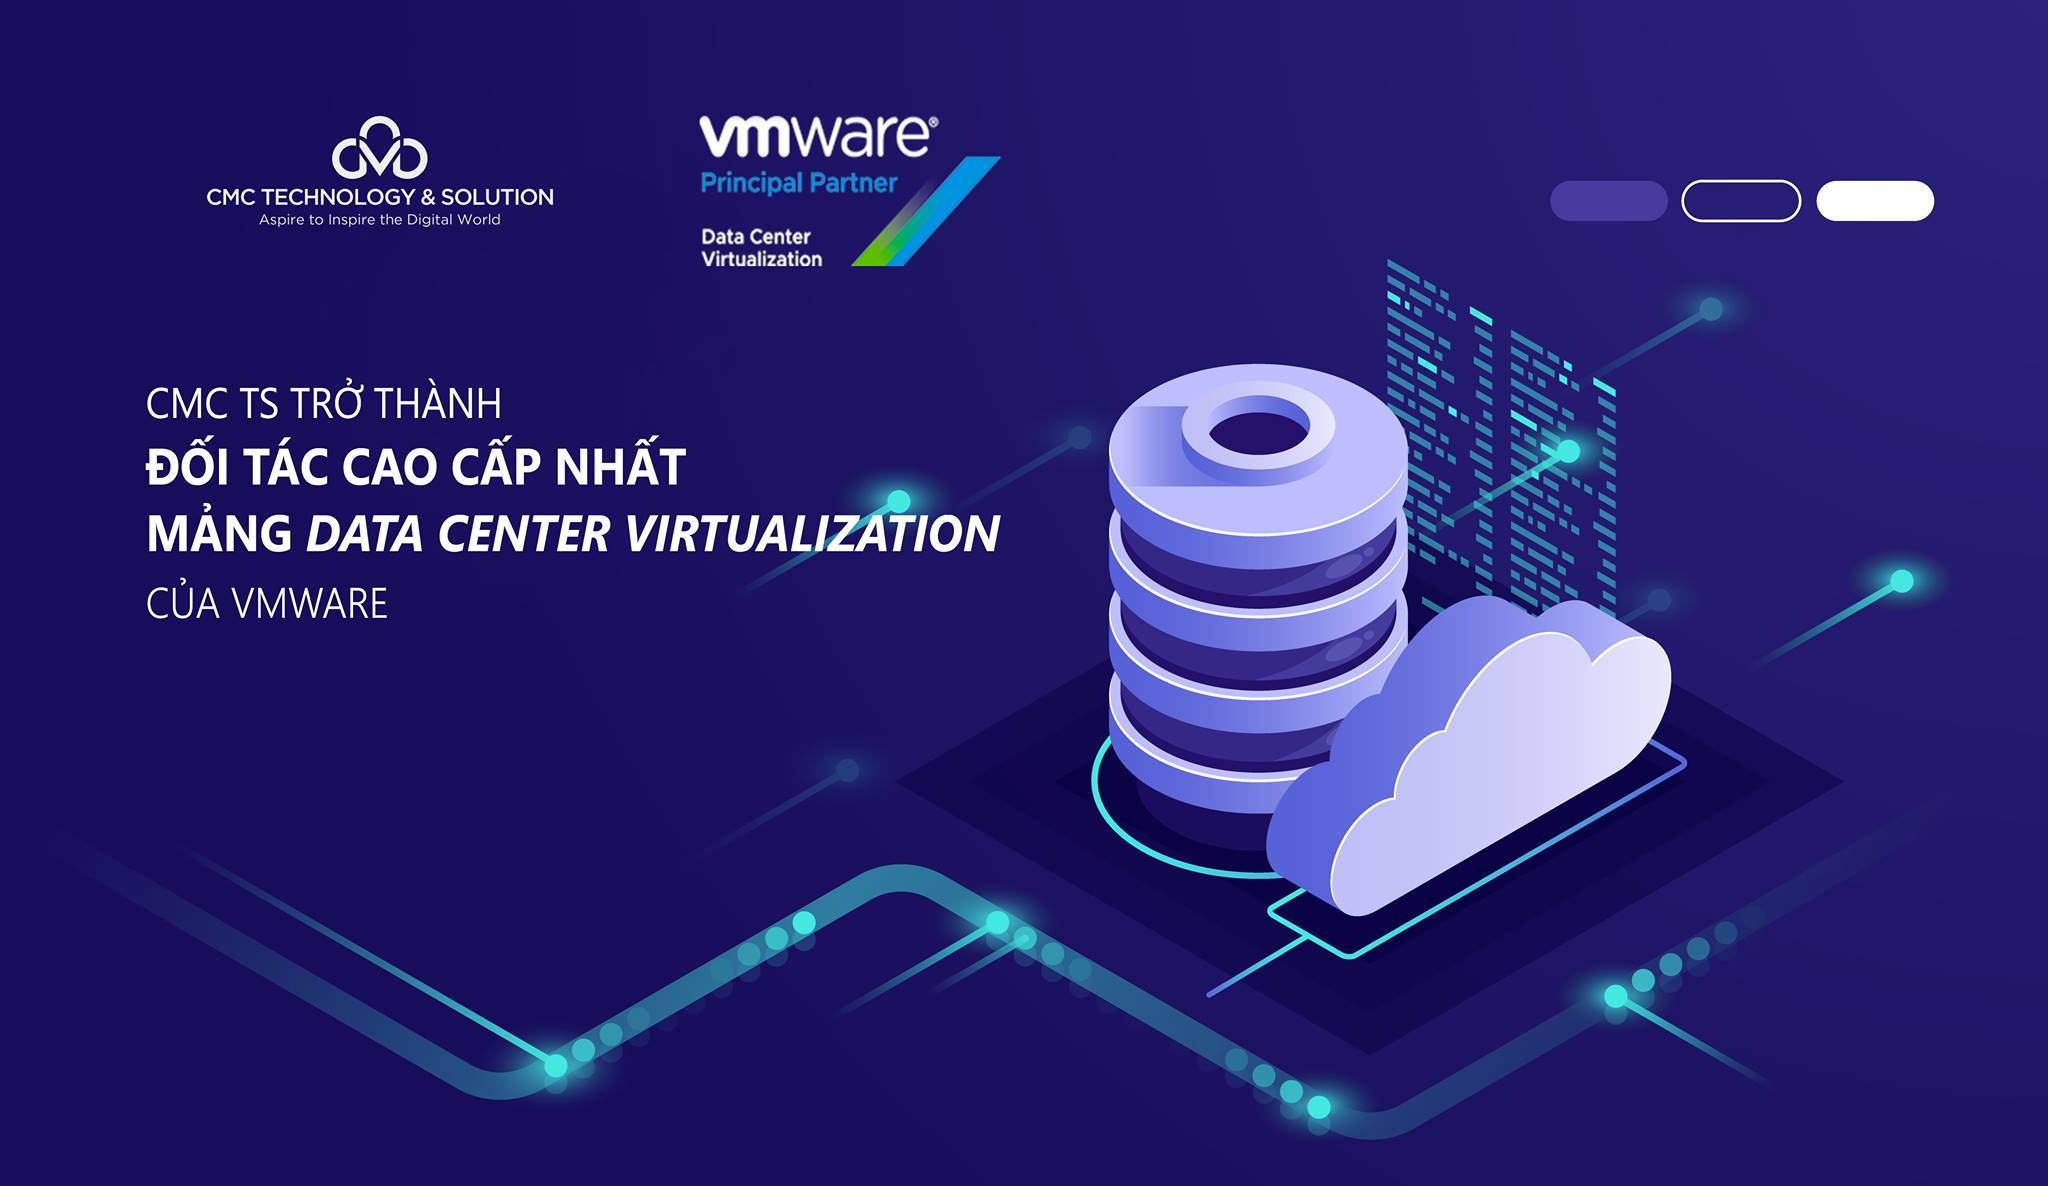 CMC TS officially becomes VMWare Principal Partner for data center virtualization